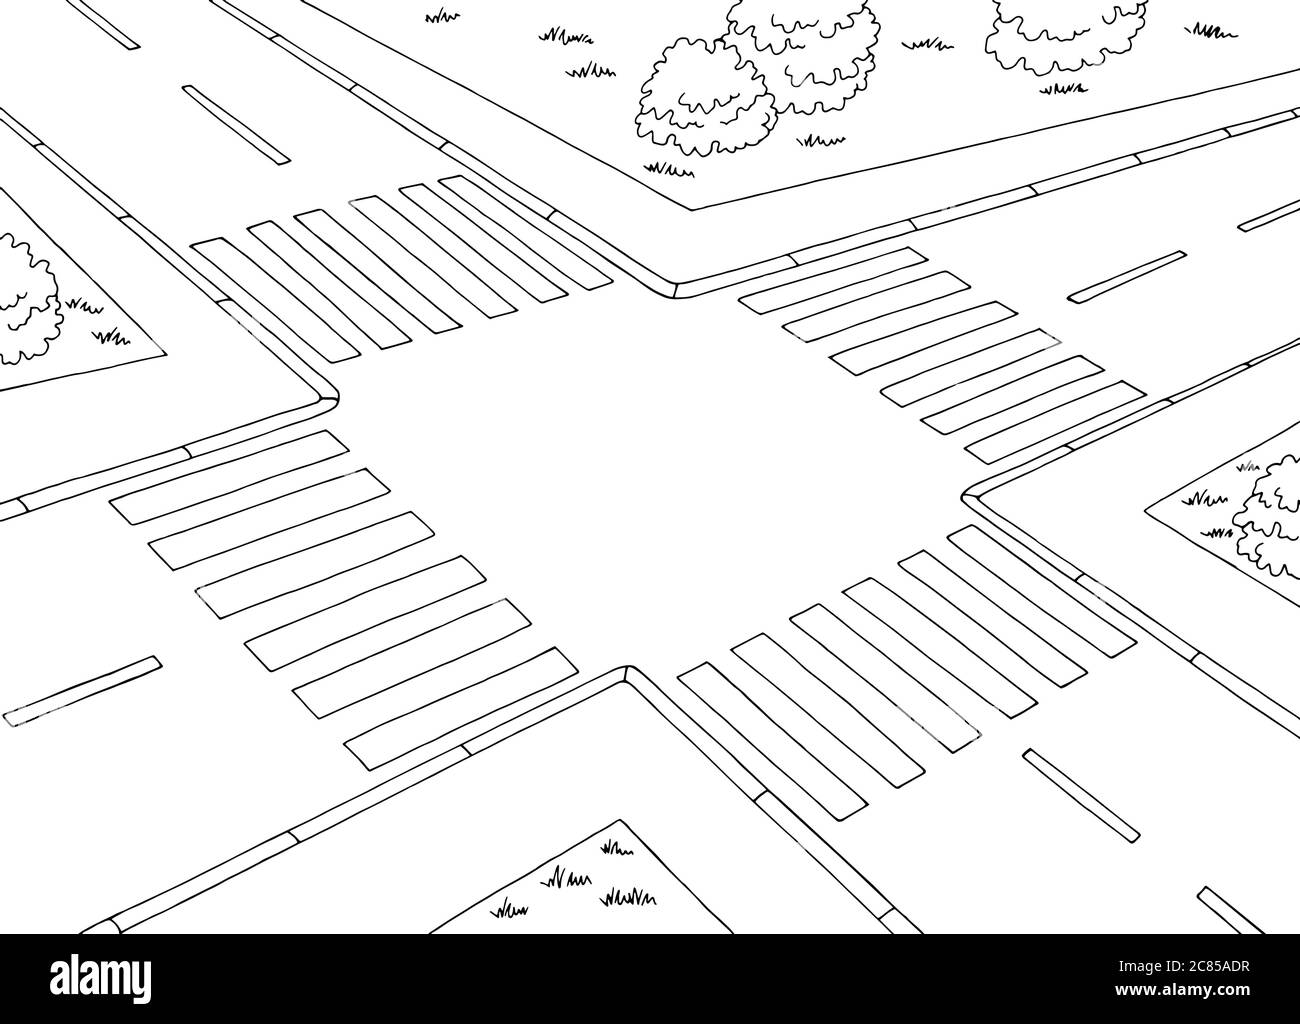 Crossroad Street Grafik schwarz weiß Skizze Luftbild Landschaft Illustration Vektor Stock Vektor